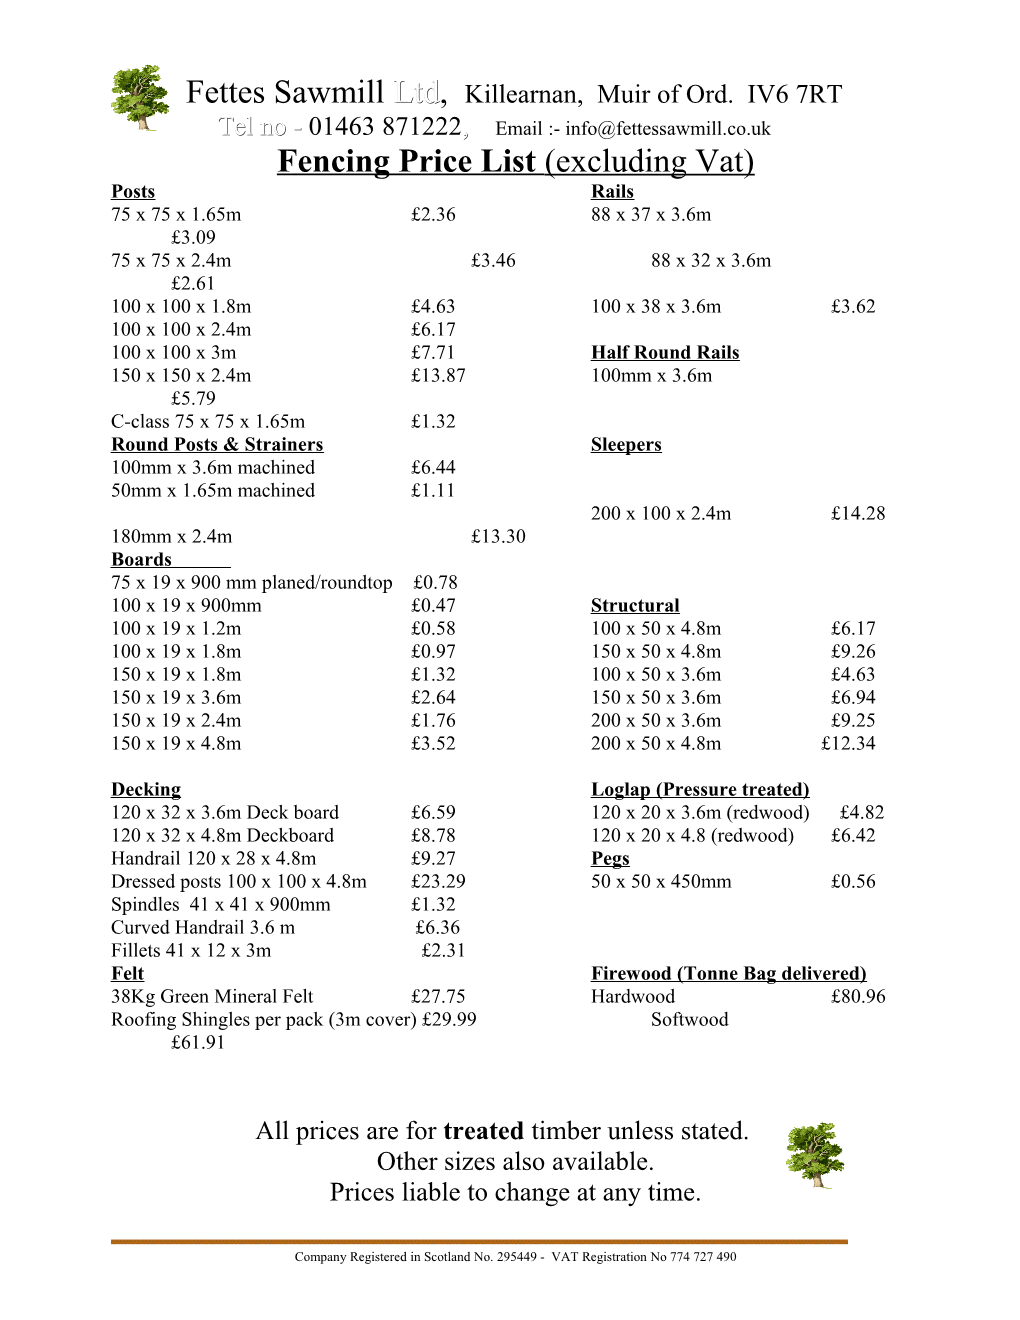 Fencing Price List (Excluding Vat)